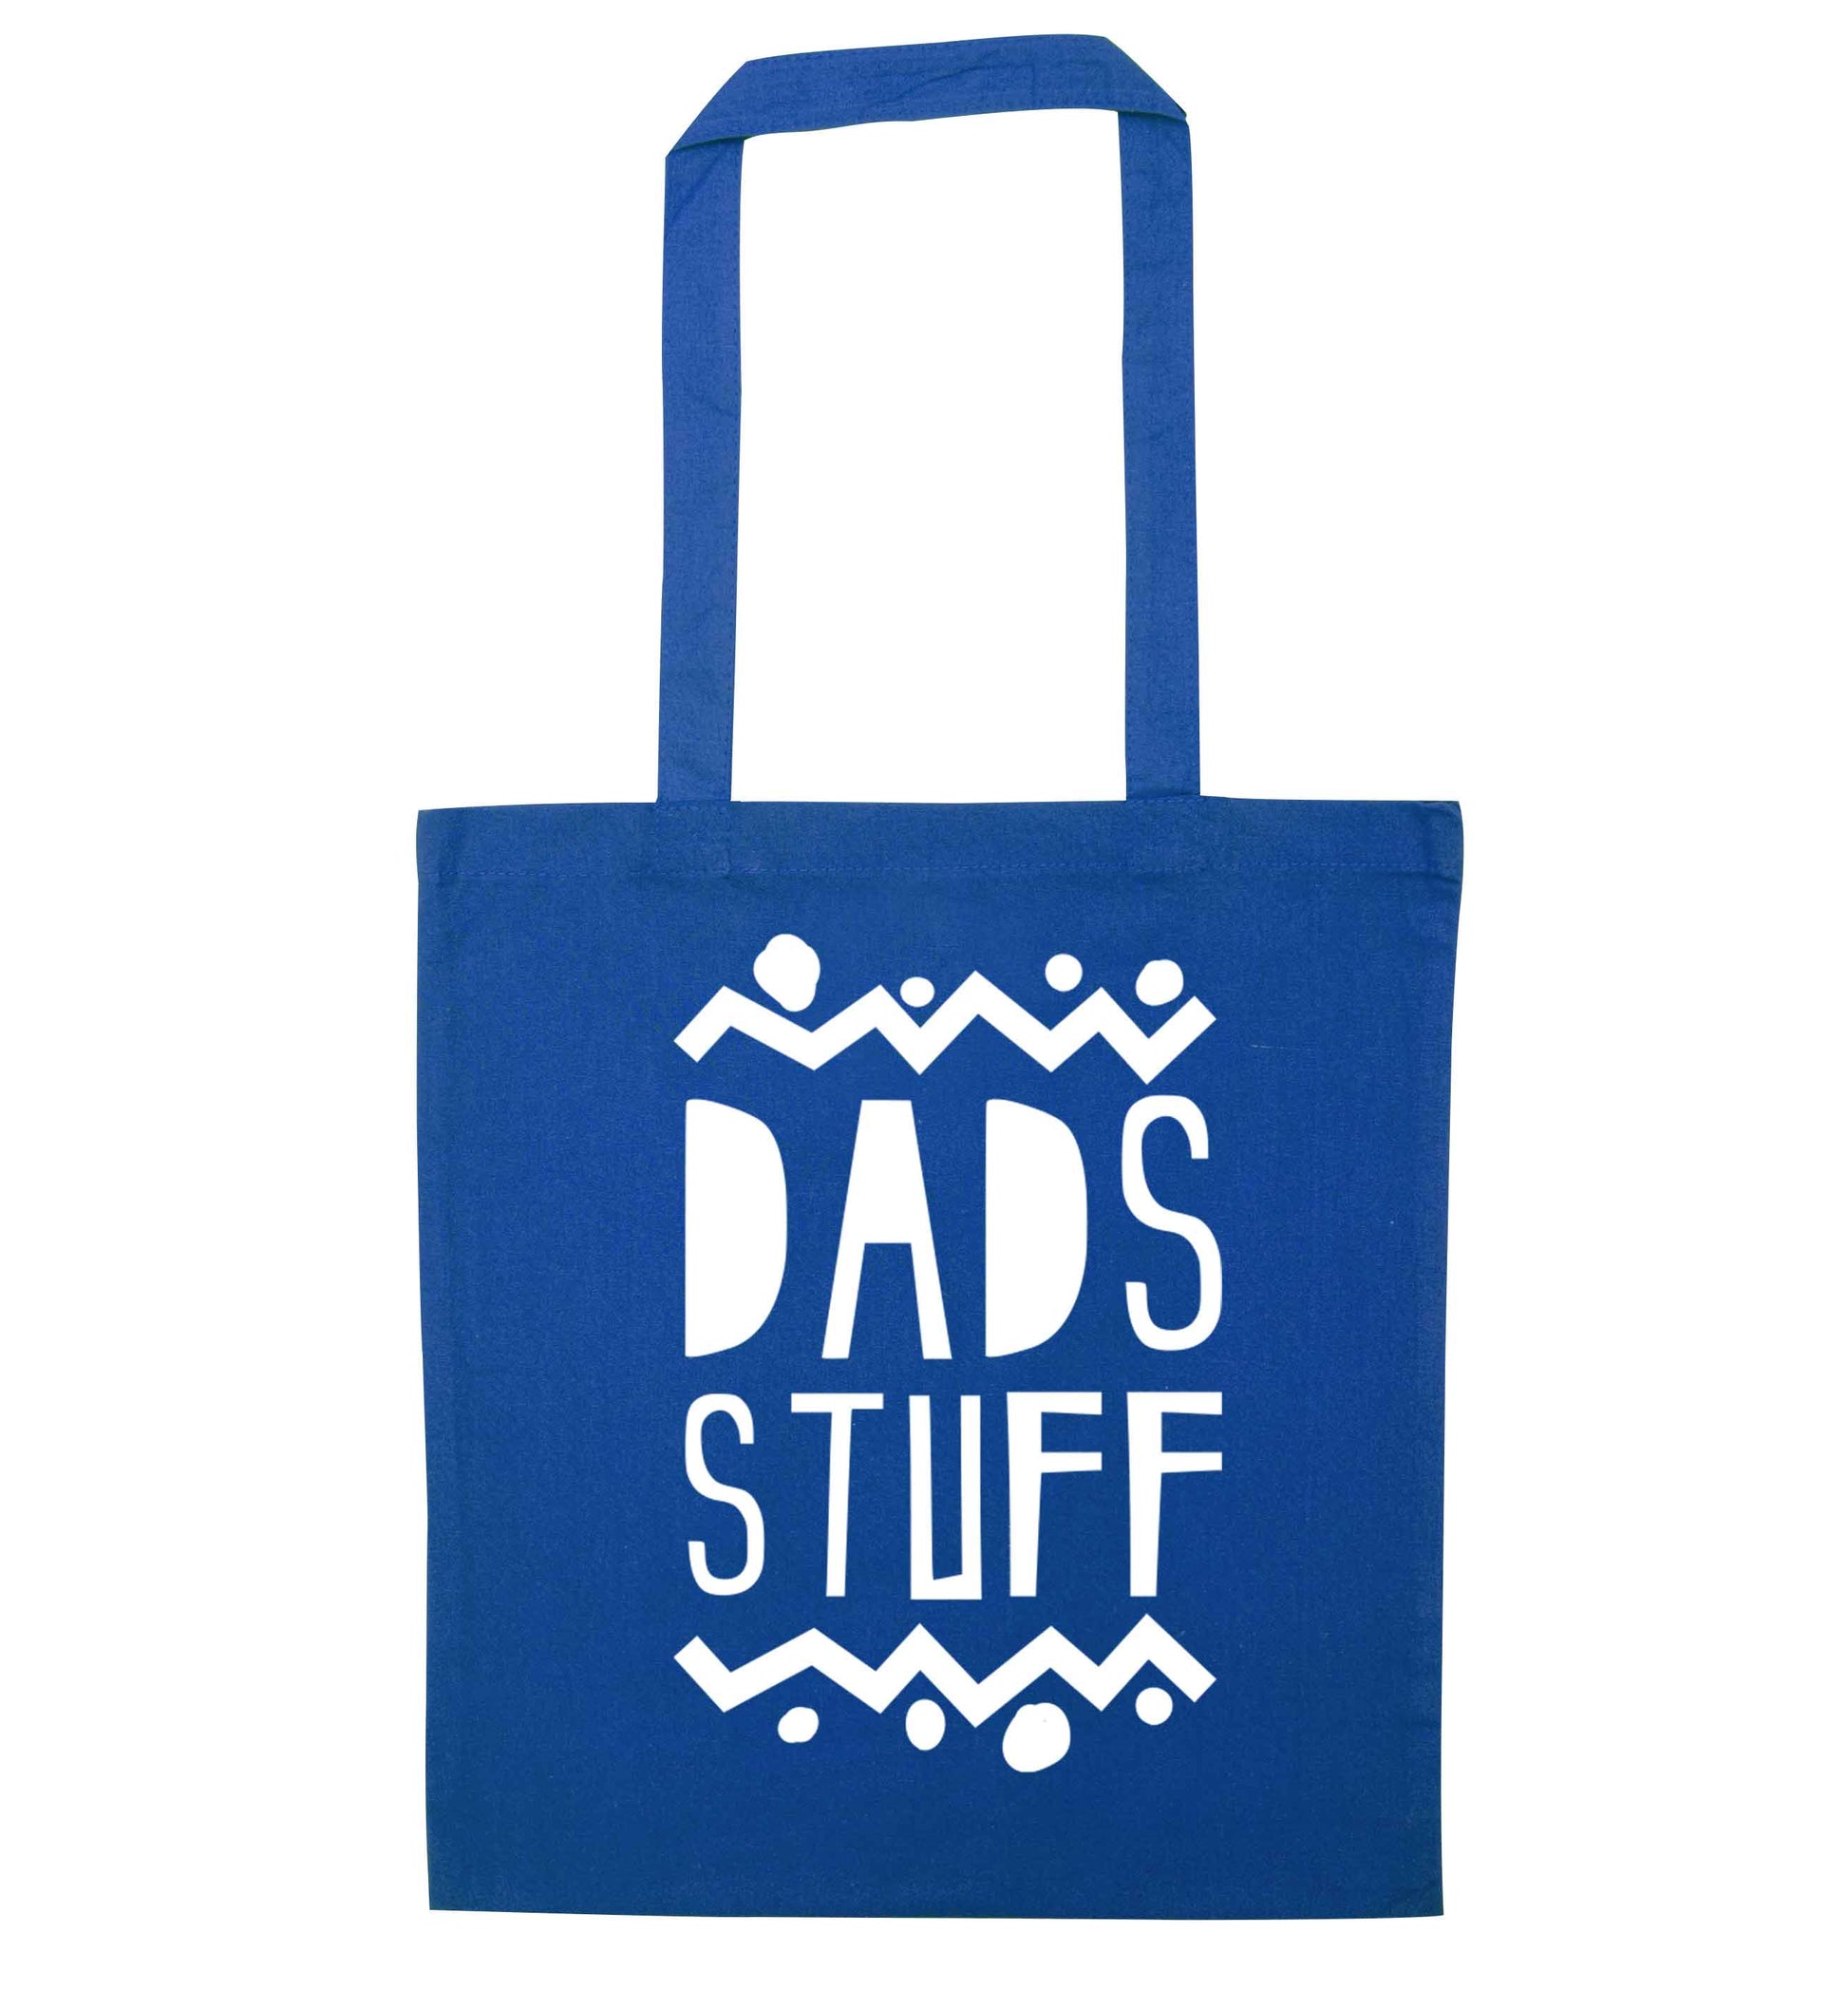 Dads stuff blue tote bag